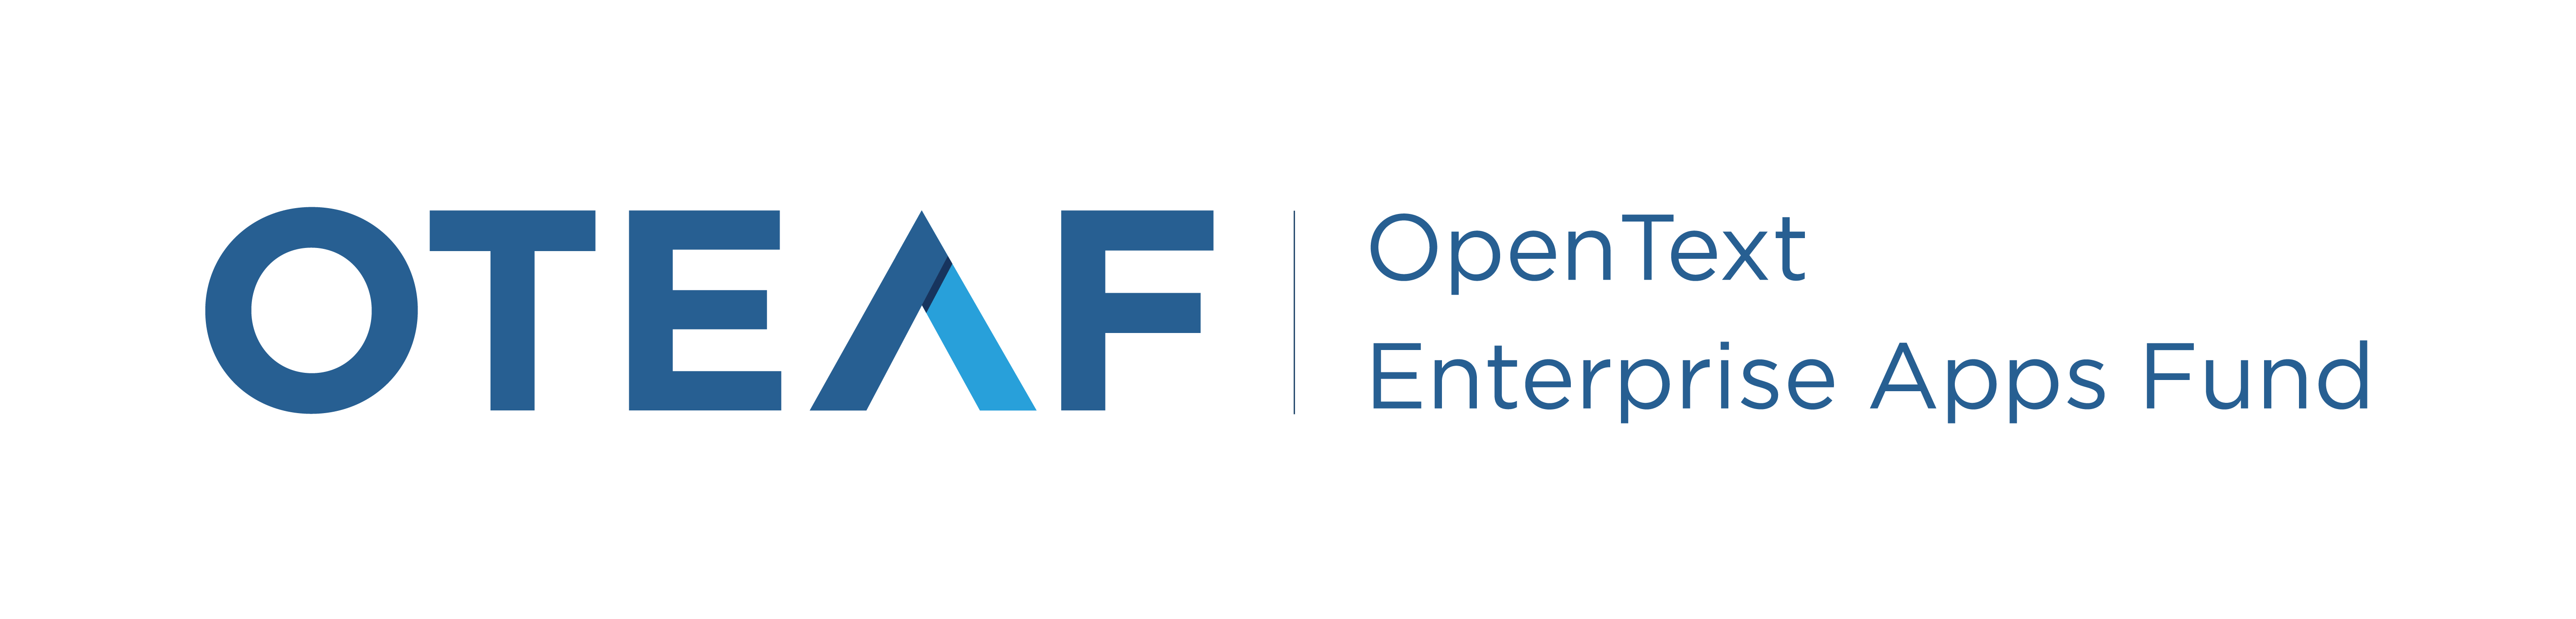 Opentext Enterprise Apps Fund